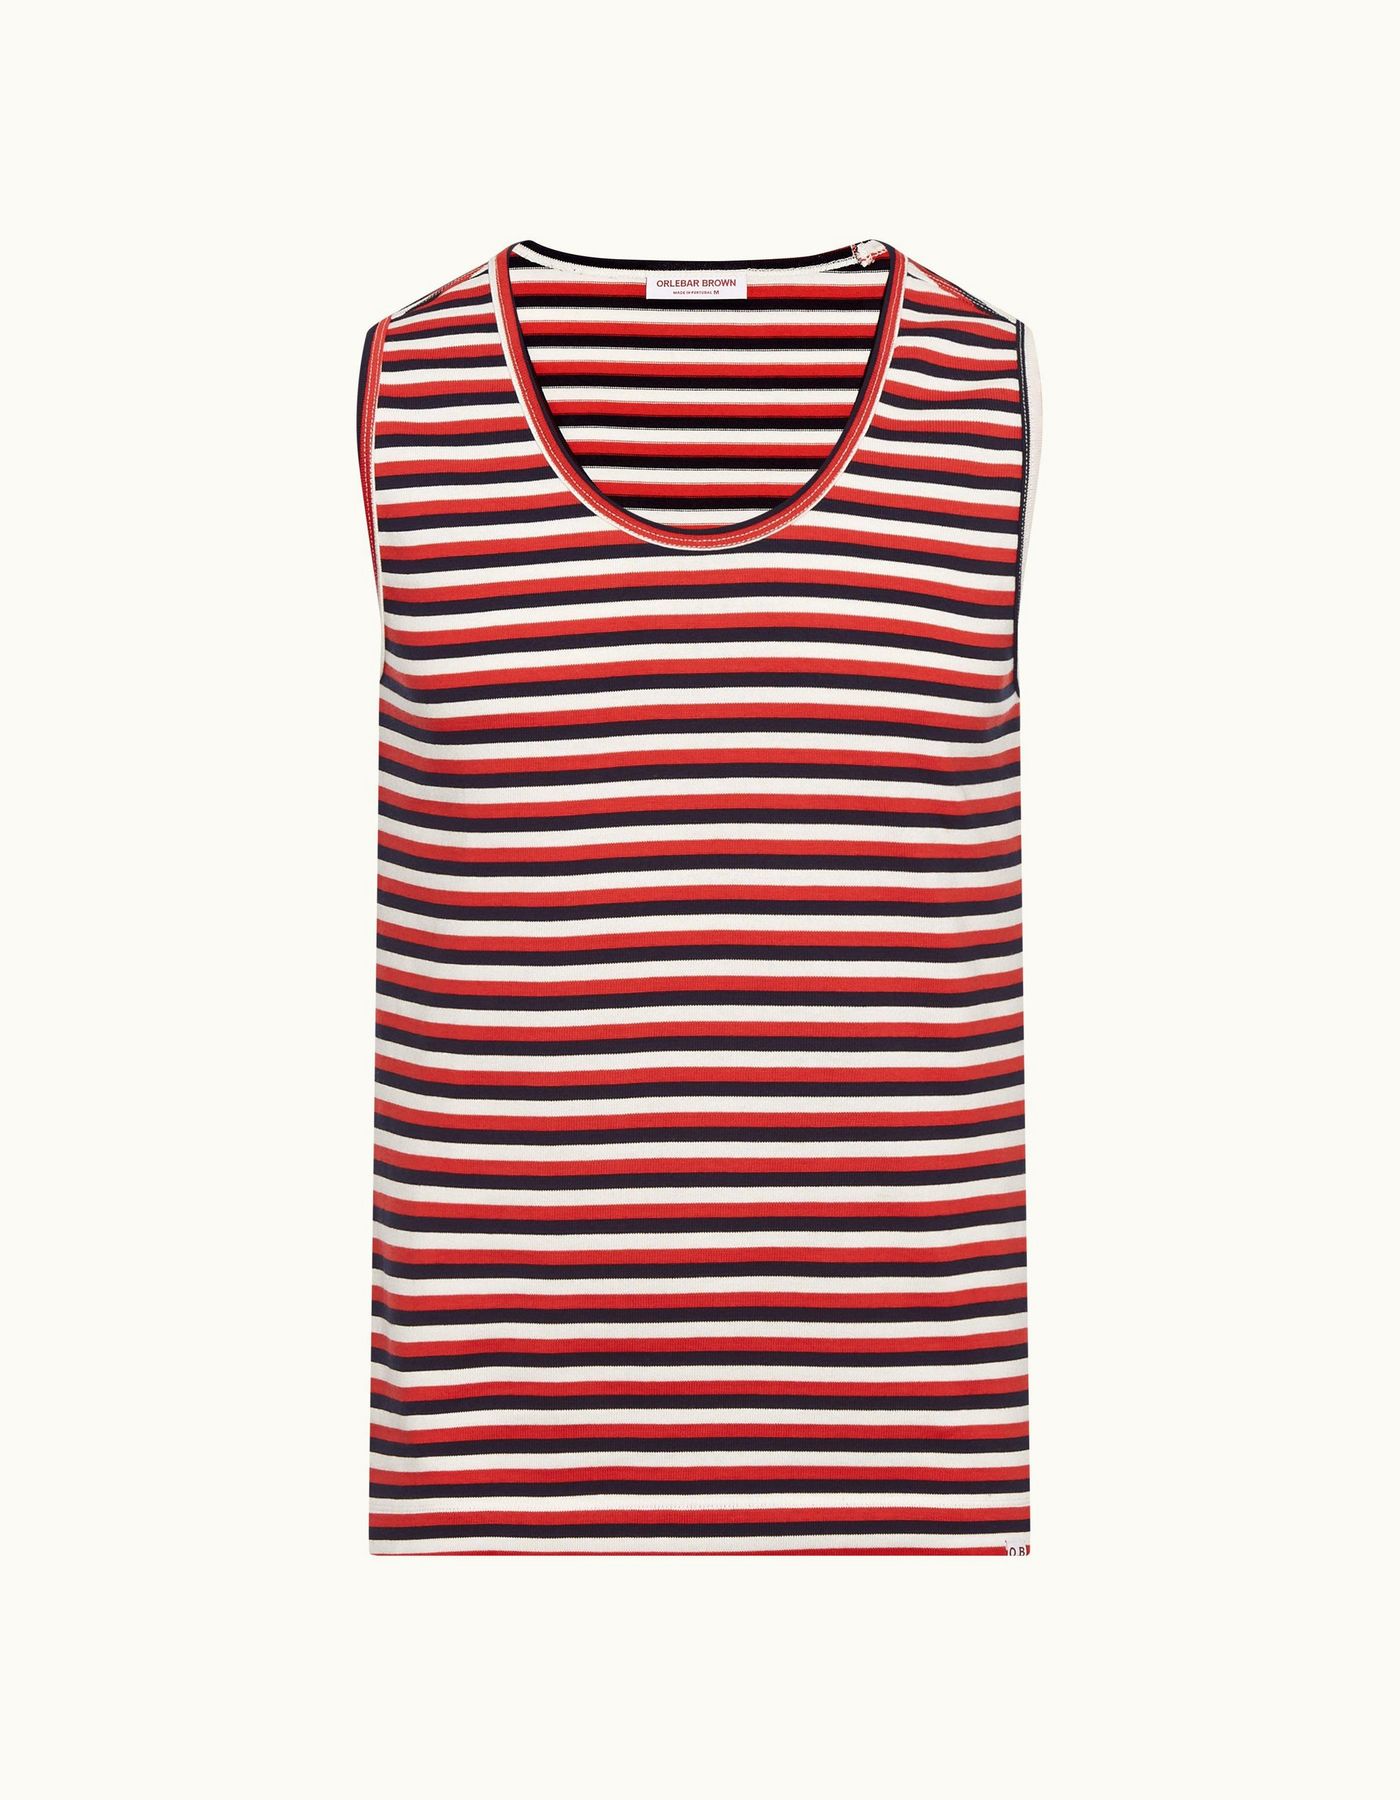 Cherbury - Mens Ink/Summer Red/White Sand Stripe Sleeveless Cotton T-shirt